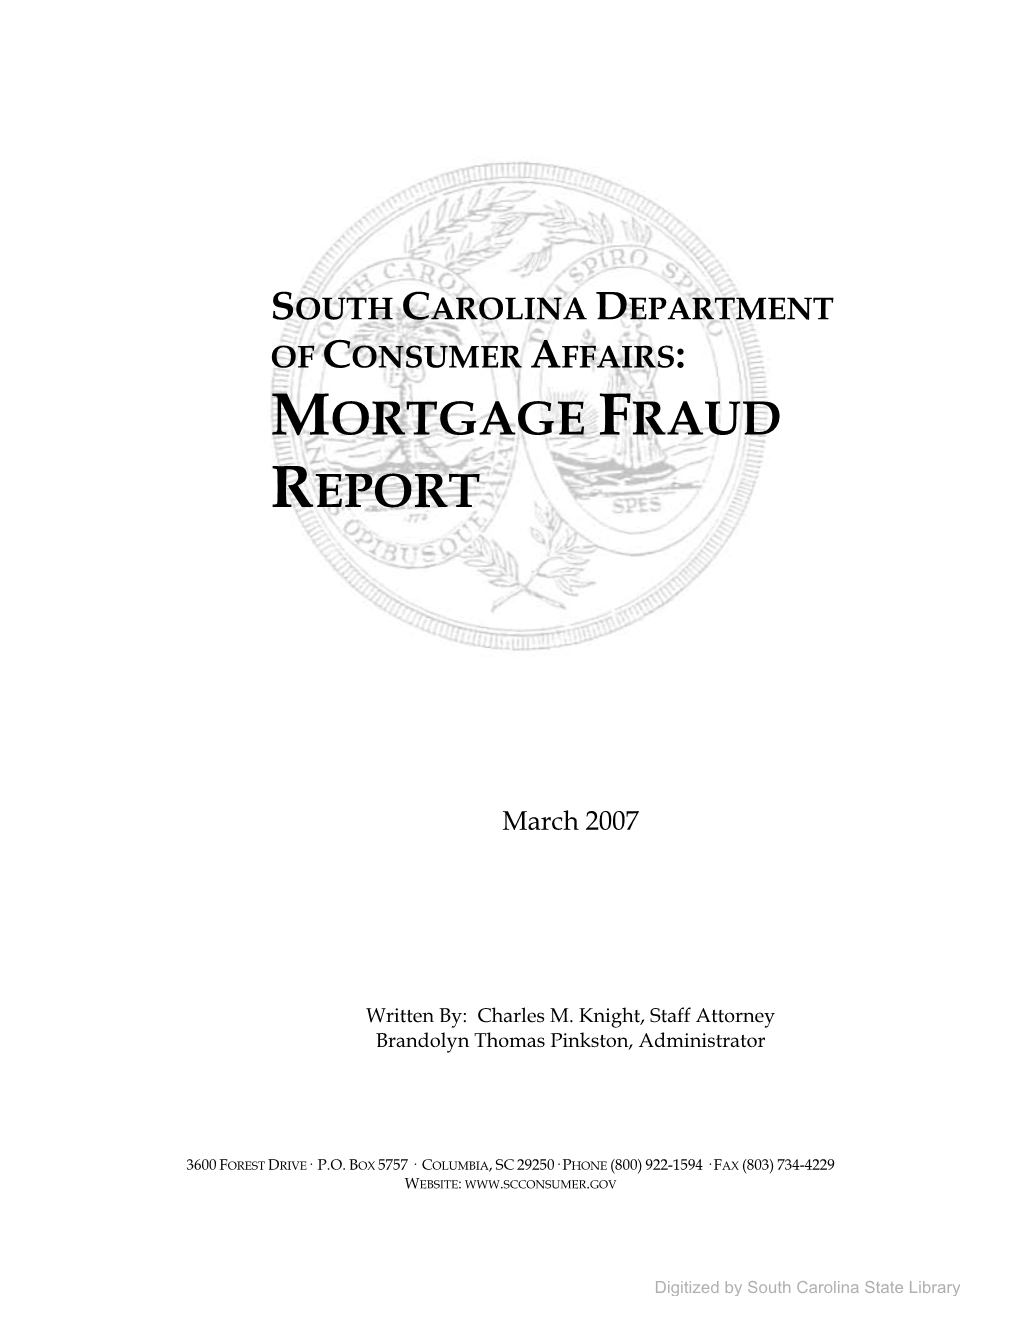 Mortgage Fraud Report